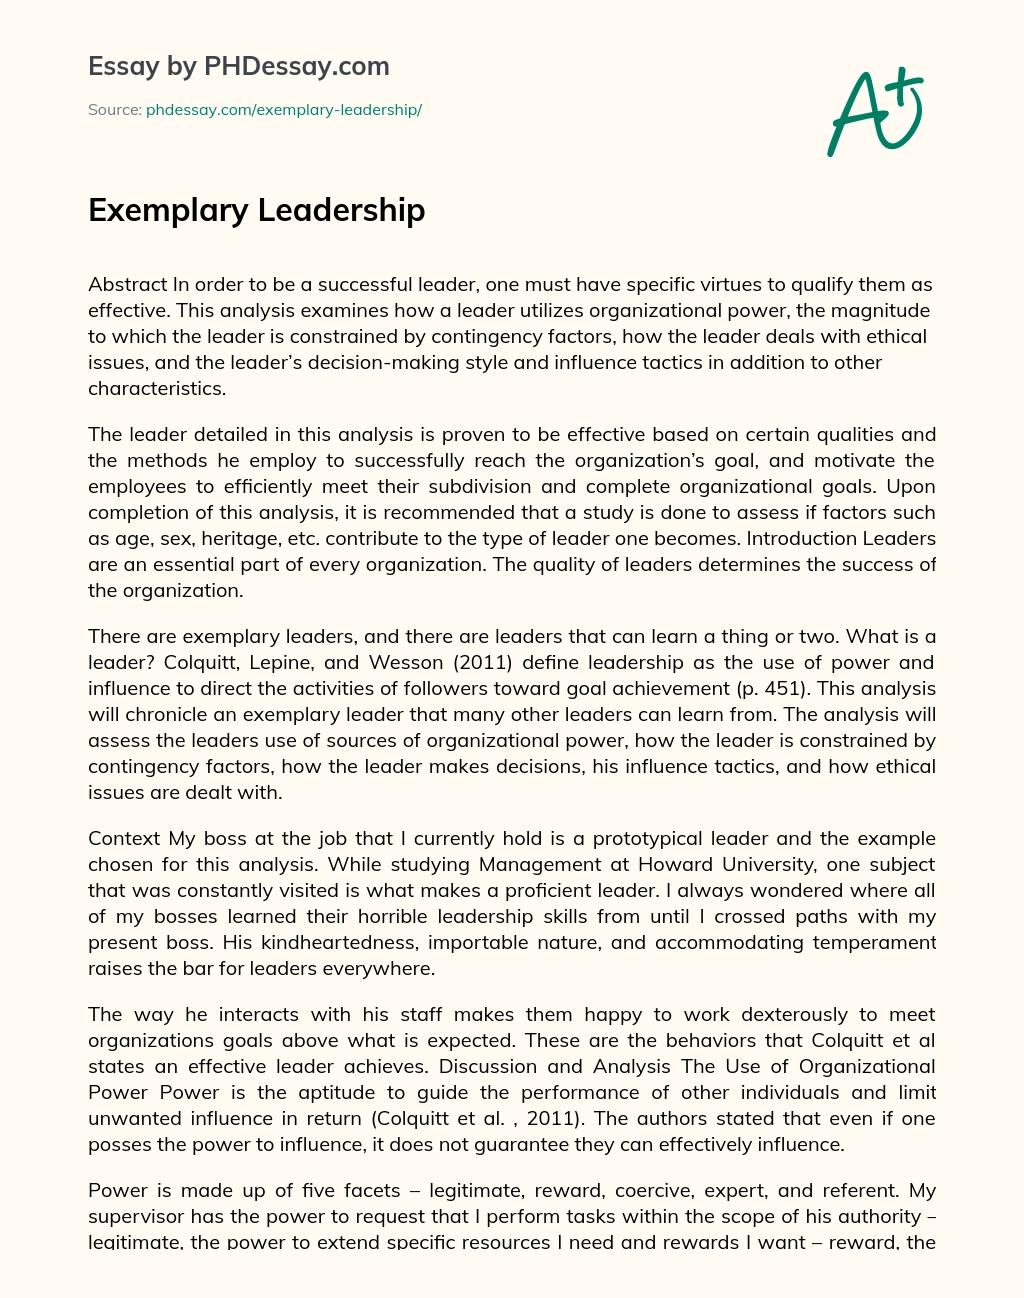 Exemplary Leadership essay